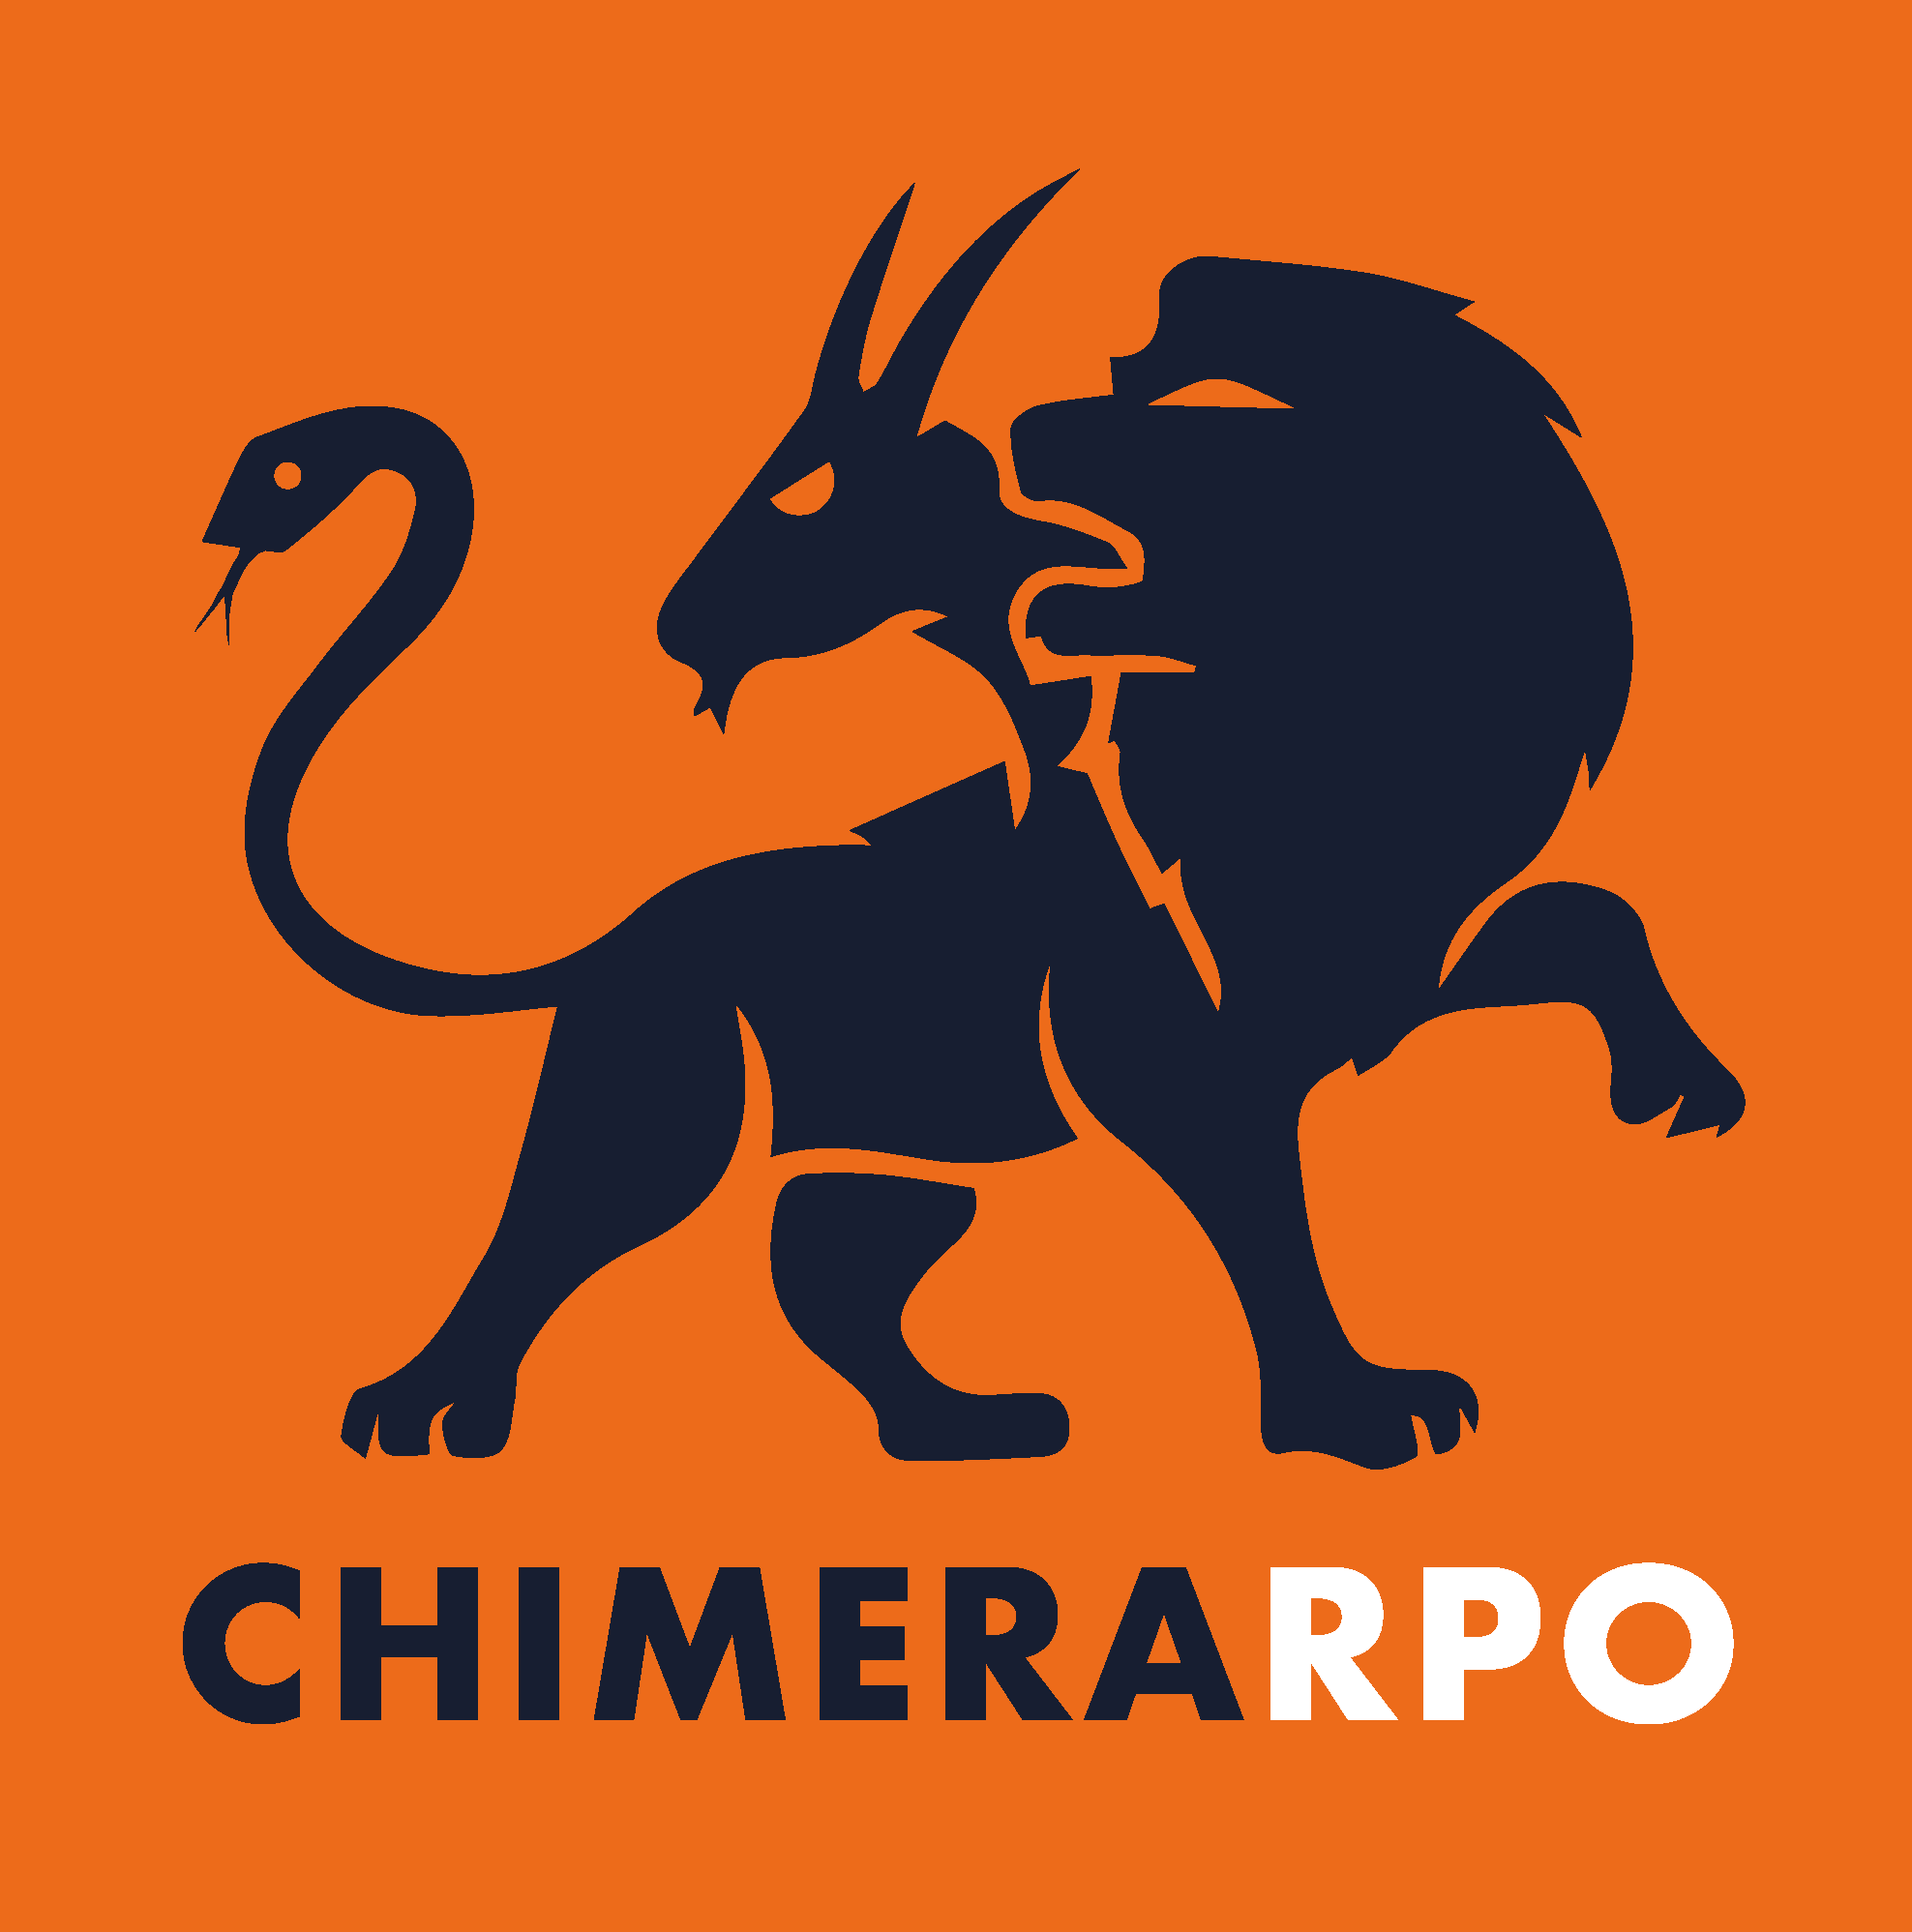 Chimera RPO